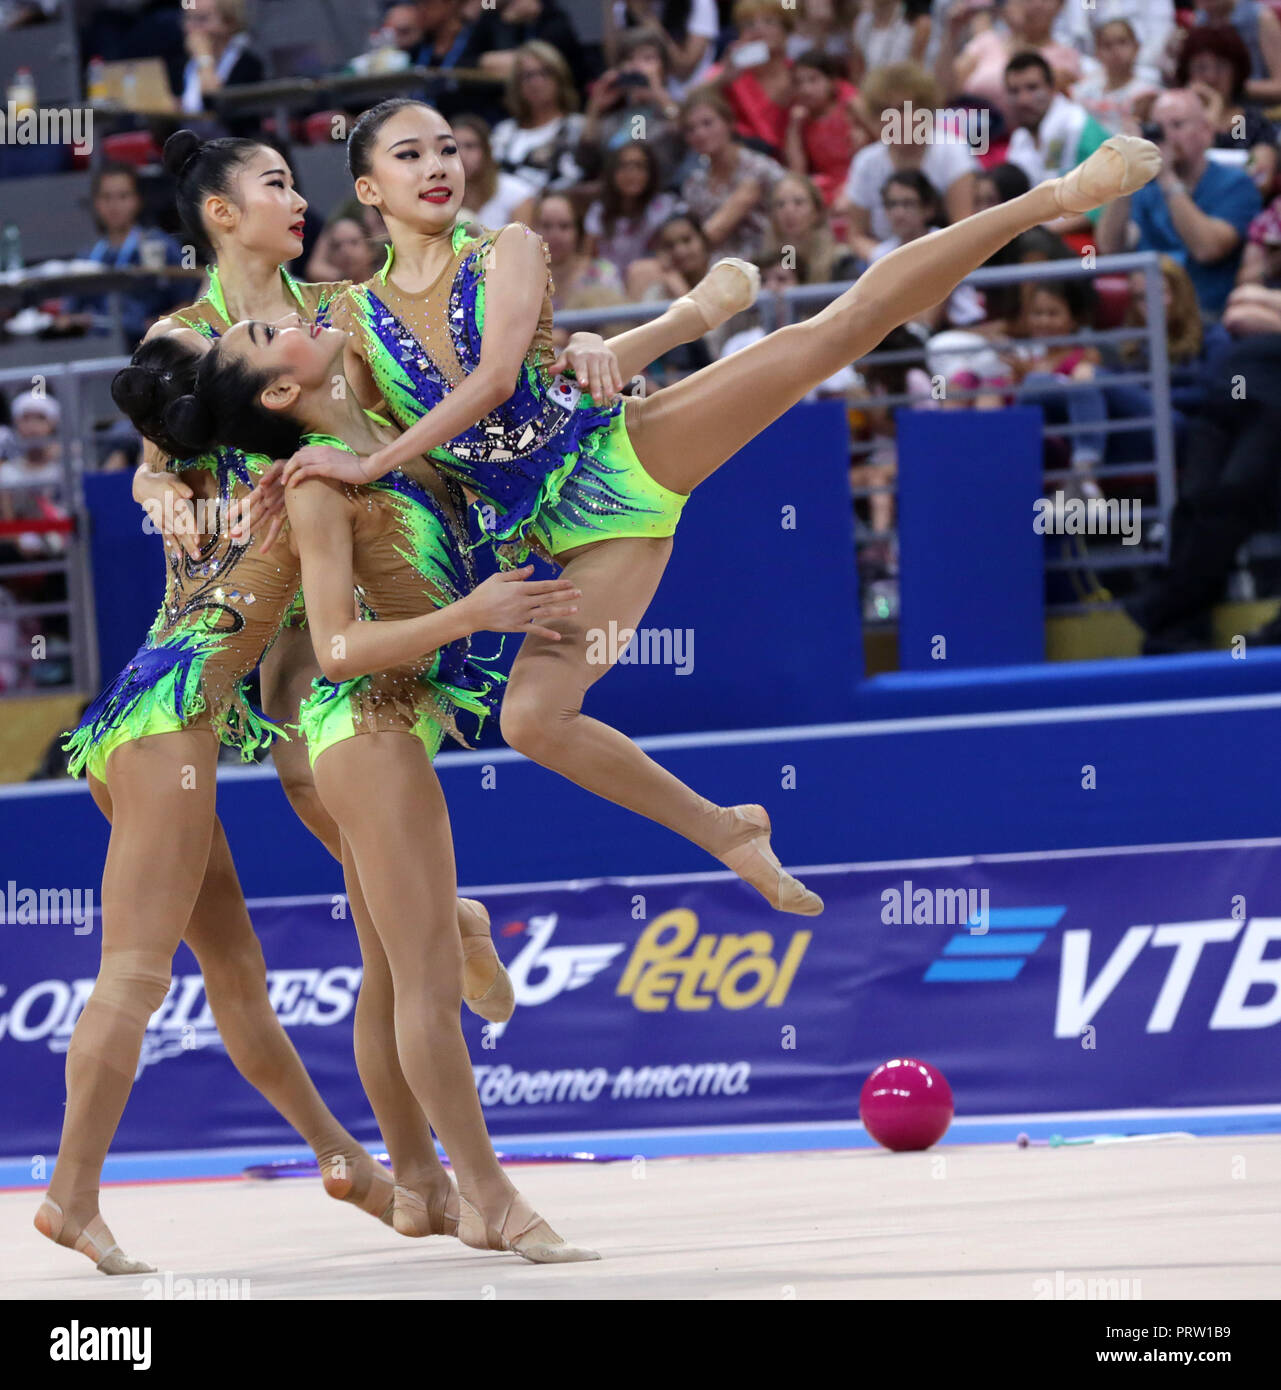 Sofia, Bulgaria - 15 September, 2018: Team Republic of Korea performs during The 2018 Rhythmic Gymnastics World Championships. Group tournament. Stock Photo